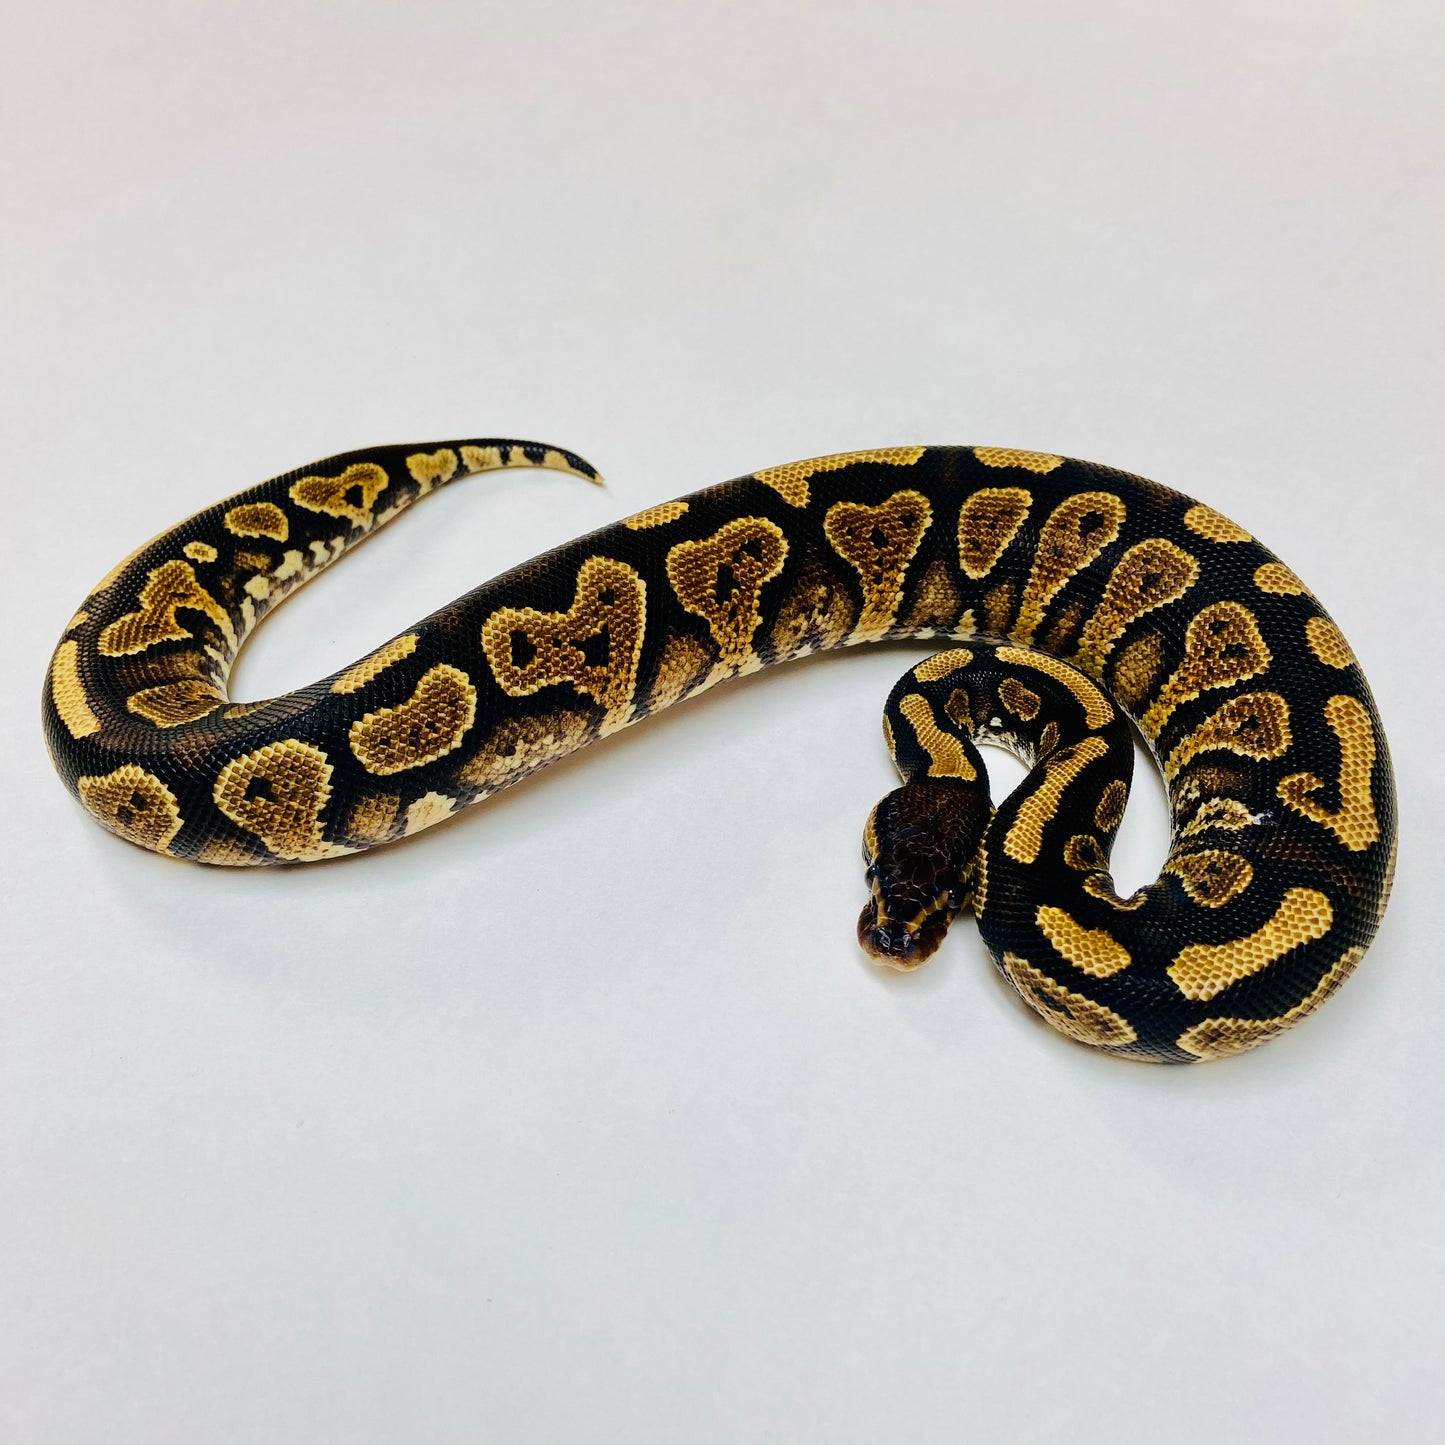 YellowBelly Ball Python Female- #2023F02